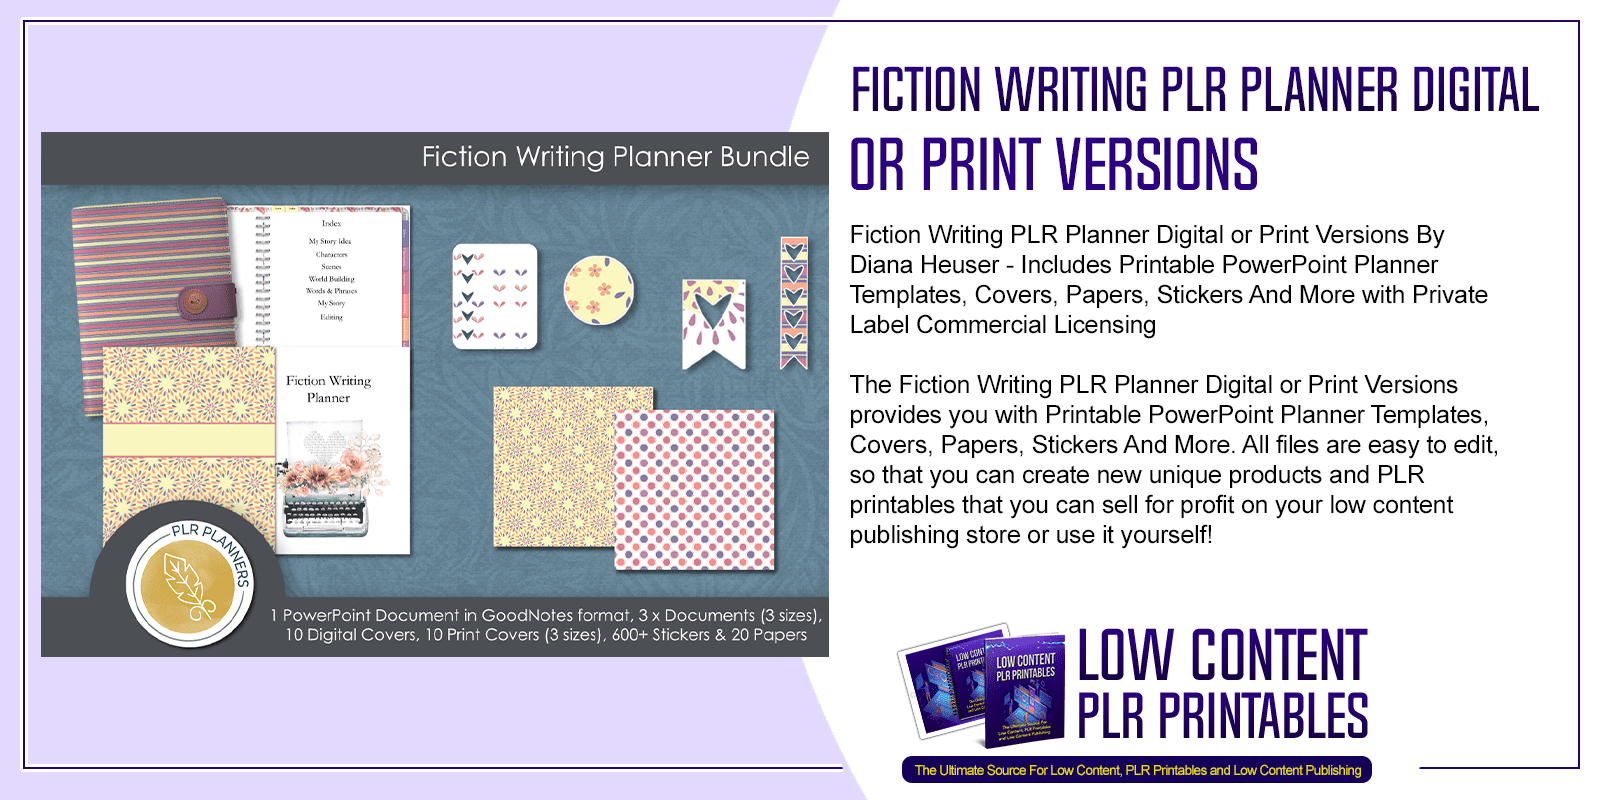 Fiction Writing PLR Planner Digital or Print Versions